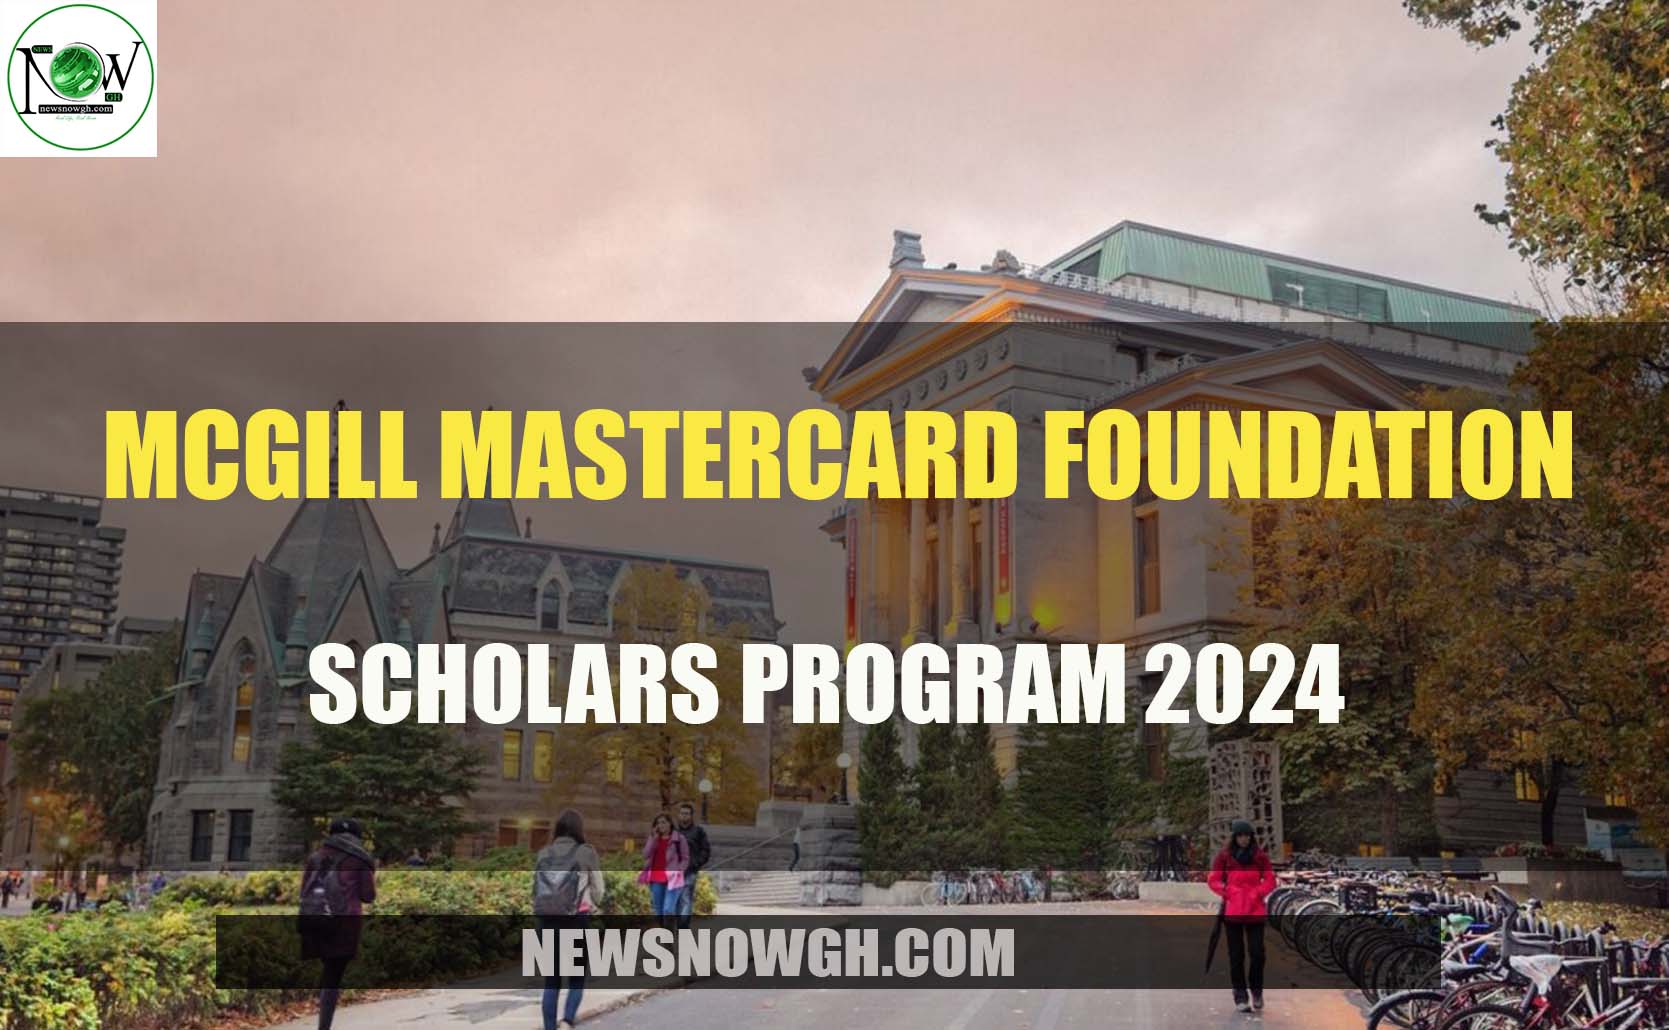 McGill Mastercard Foundation 1 